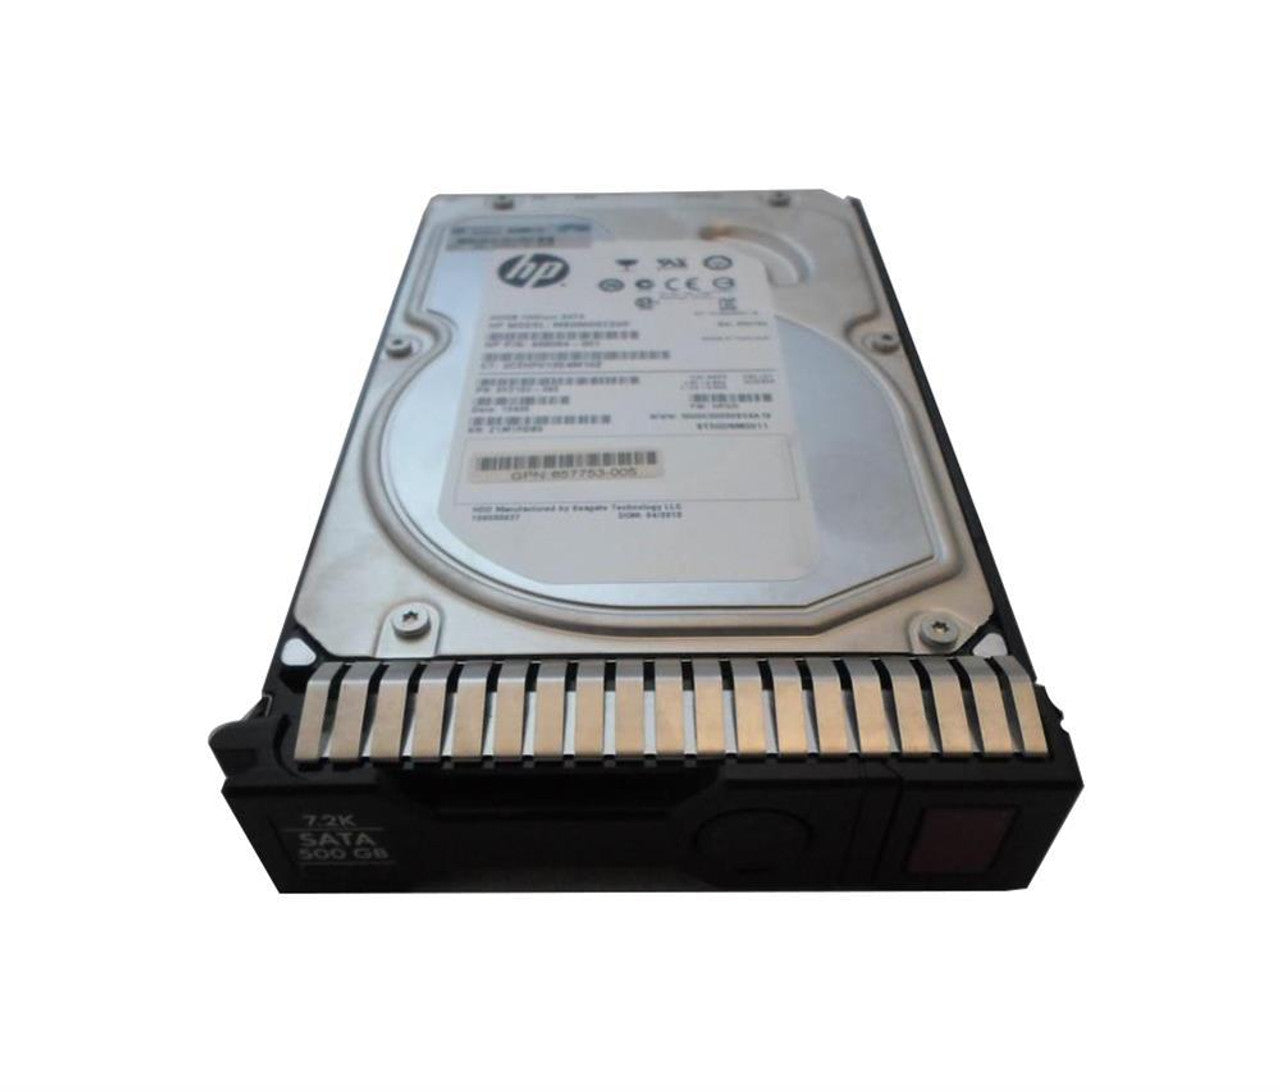 HP - 500GB 7200rpm SATA